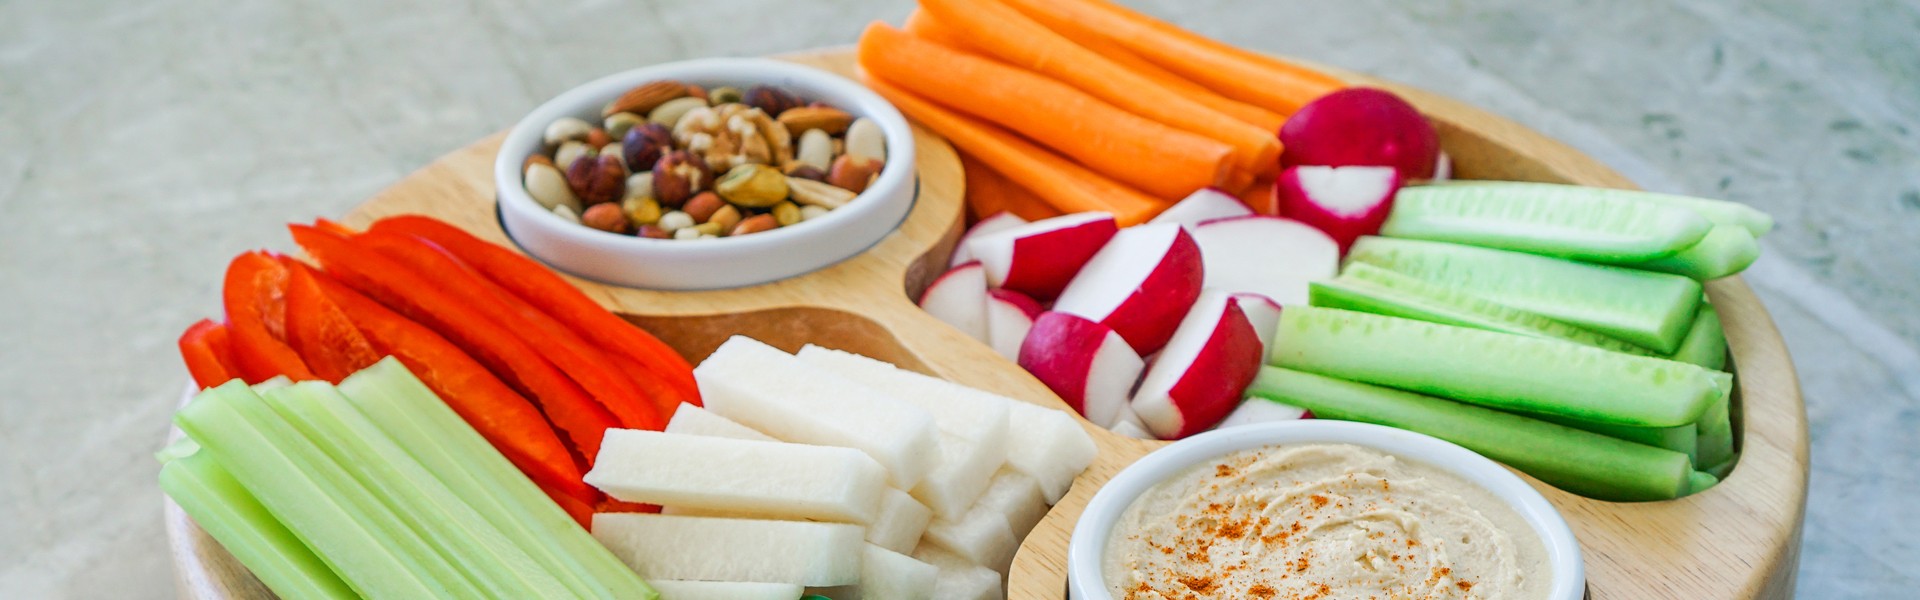 povrtna veganska plata s humusom i orasastim plodovima, zdrava prehrana